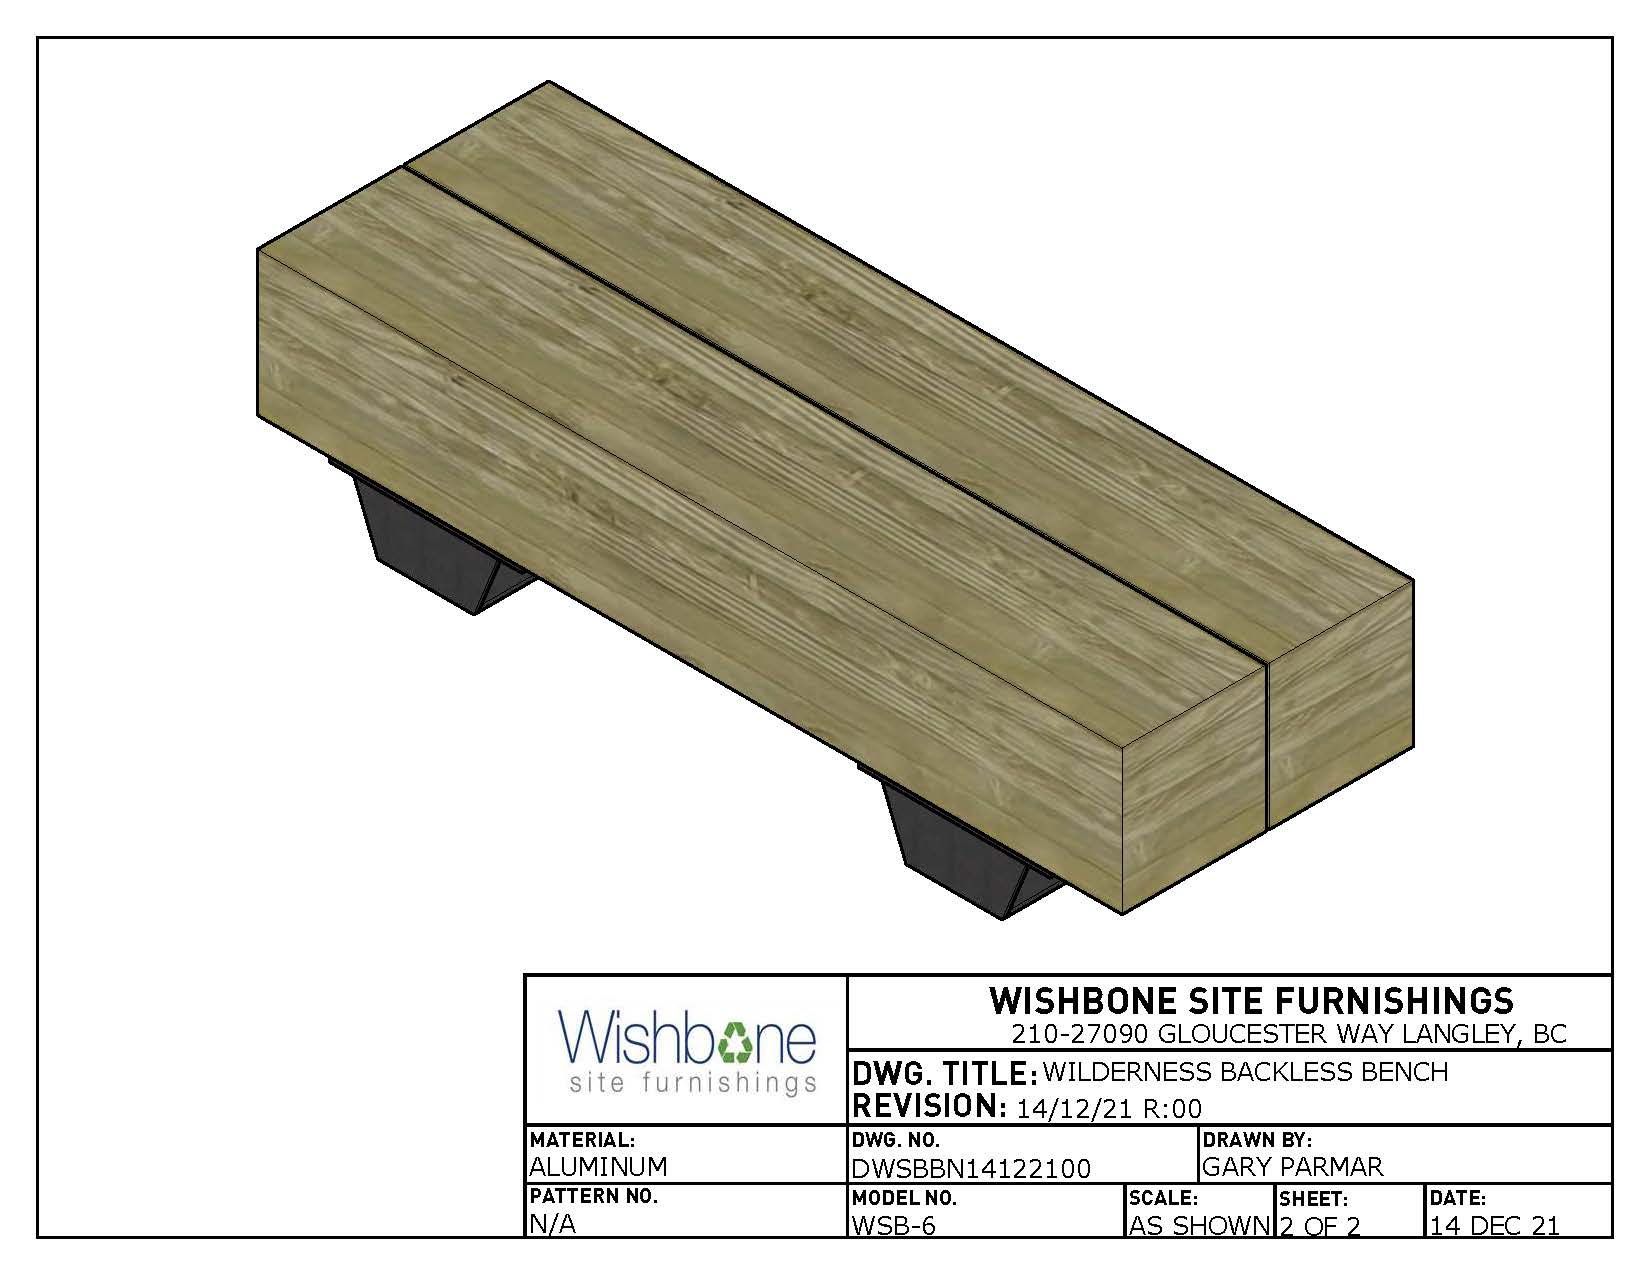 Wrap 45 - Wishbone Site Furnishings